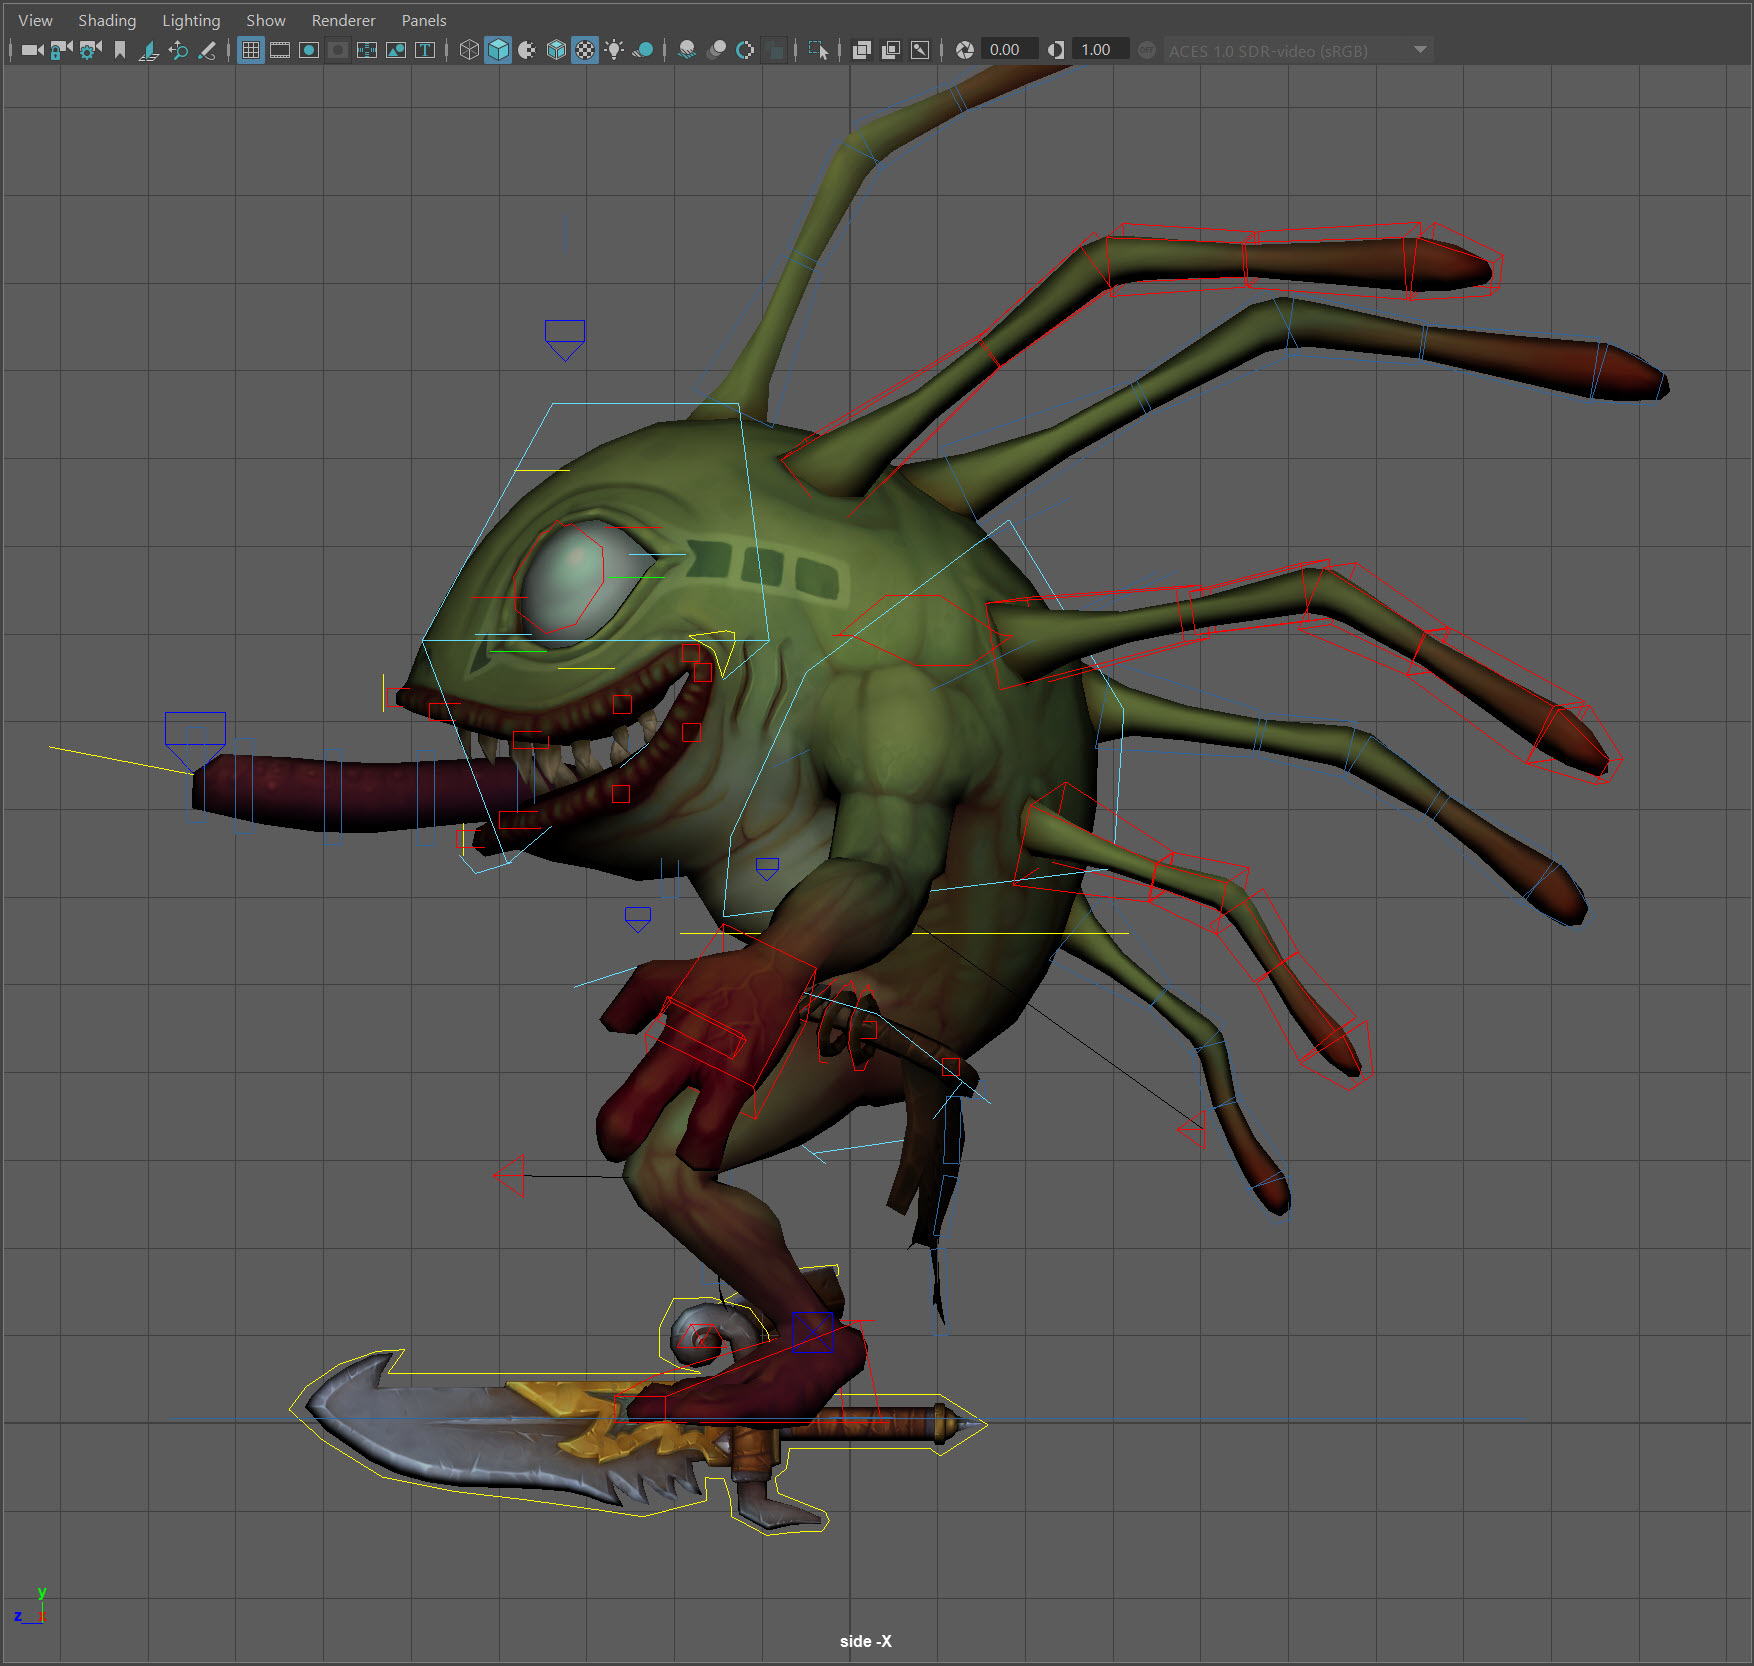 Murloc strange creature rig with textures莫洛克奇怪的生物绑定模型，有纹理插图5